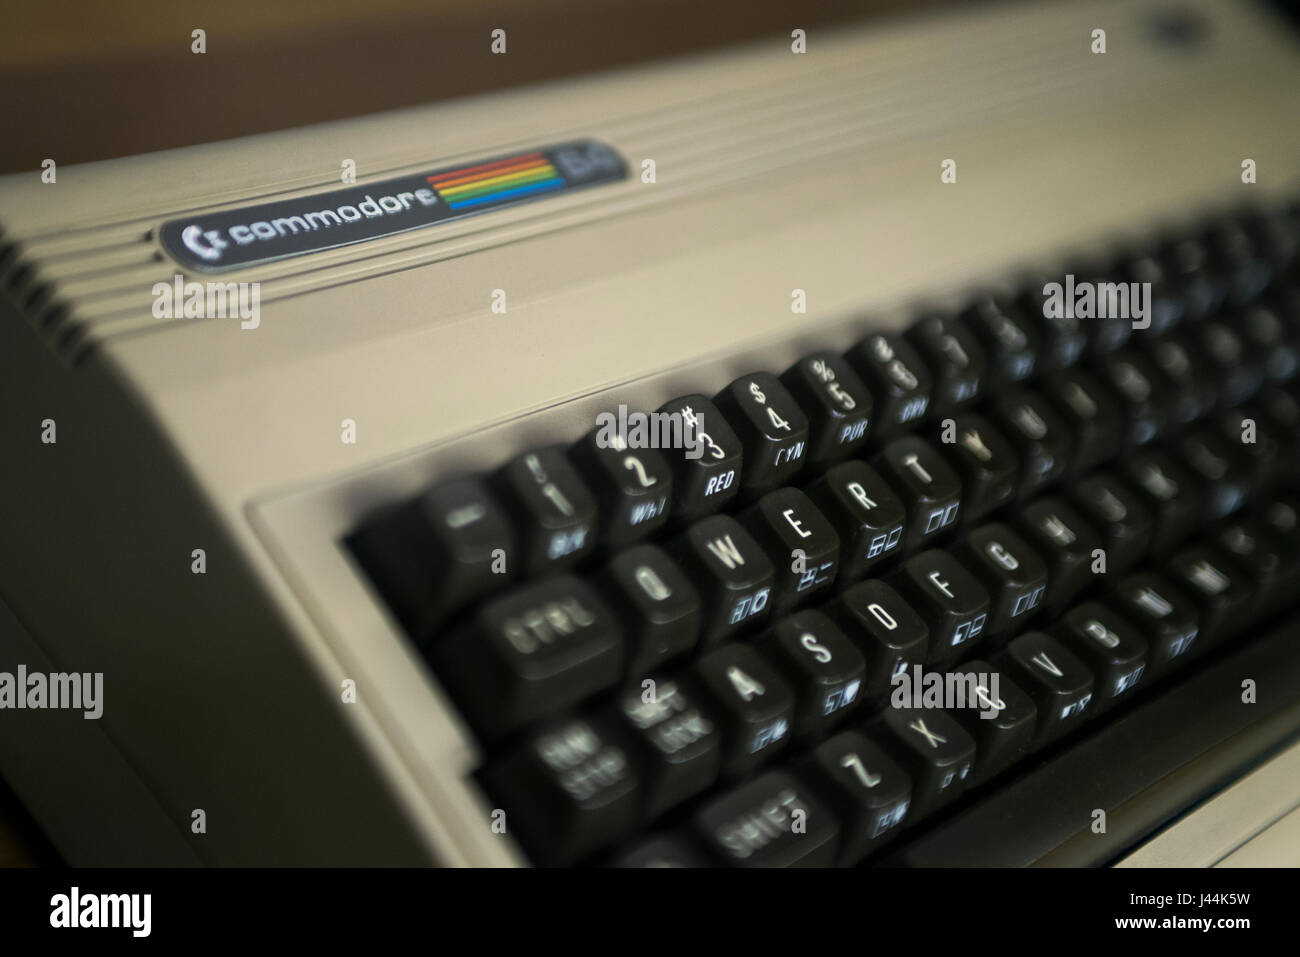 Izmir - Turkey - March 5, 2017: Commodore 64 old computers keyboard macro shot. Stock Photo